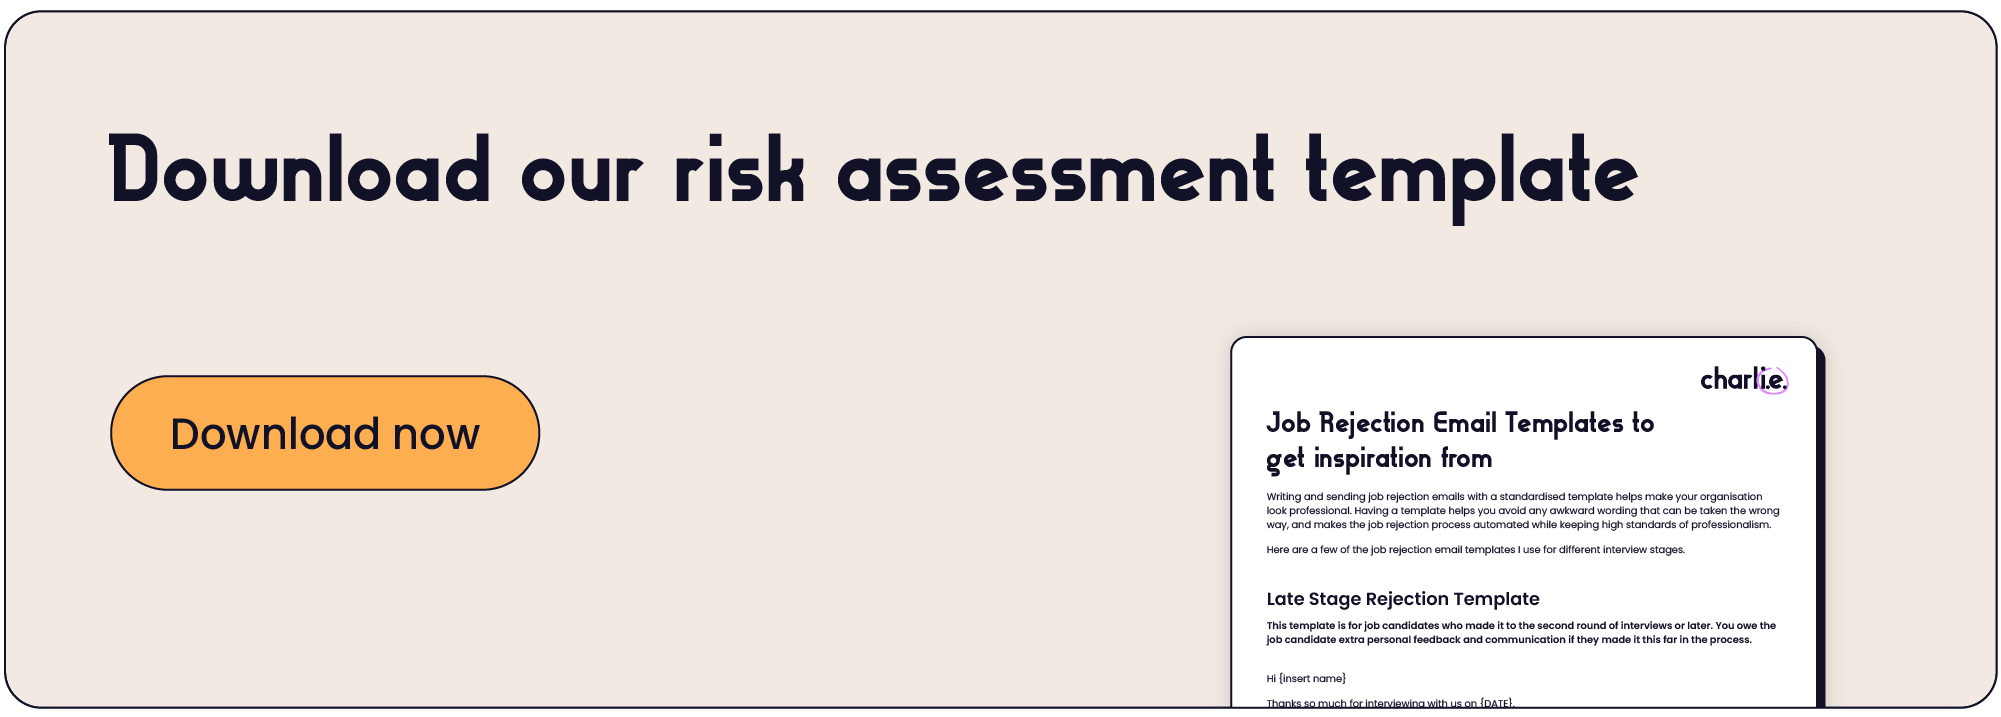 Download our risk assessment template.webp